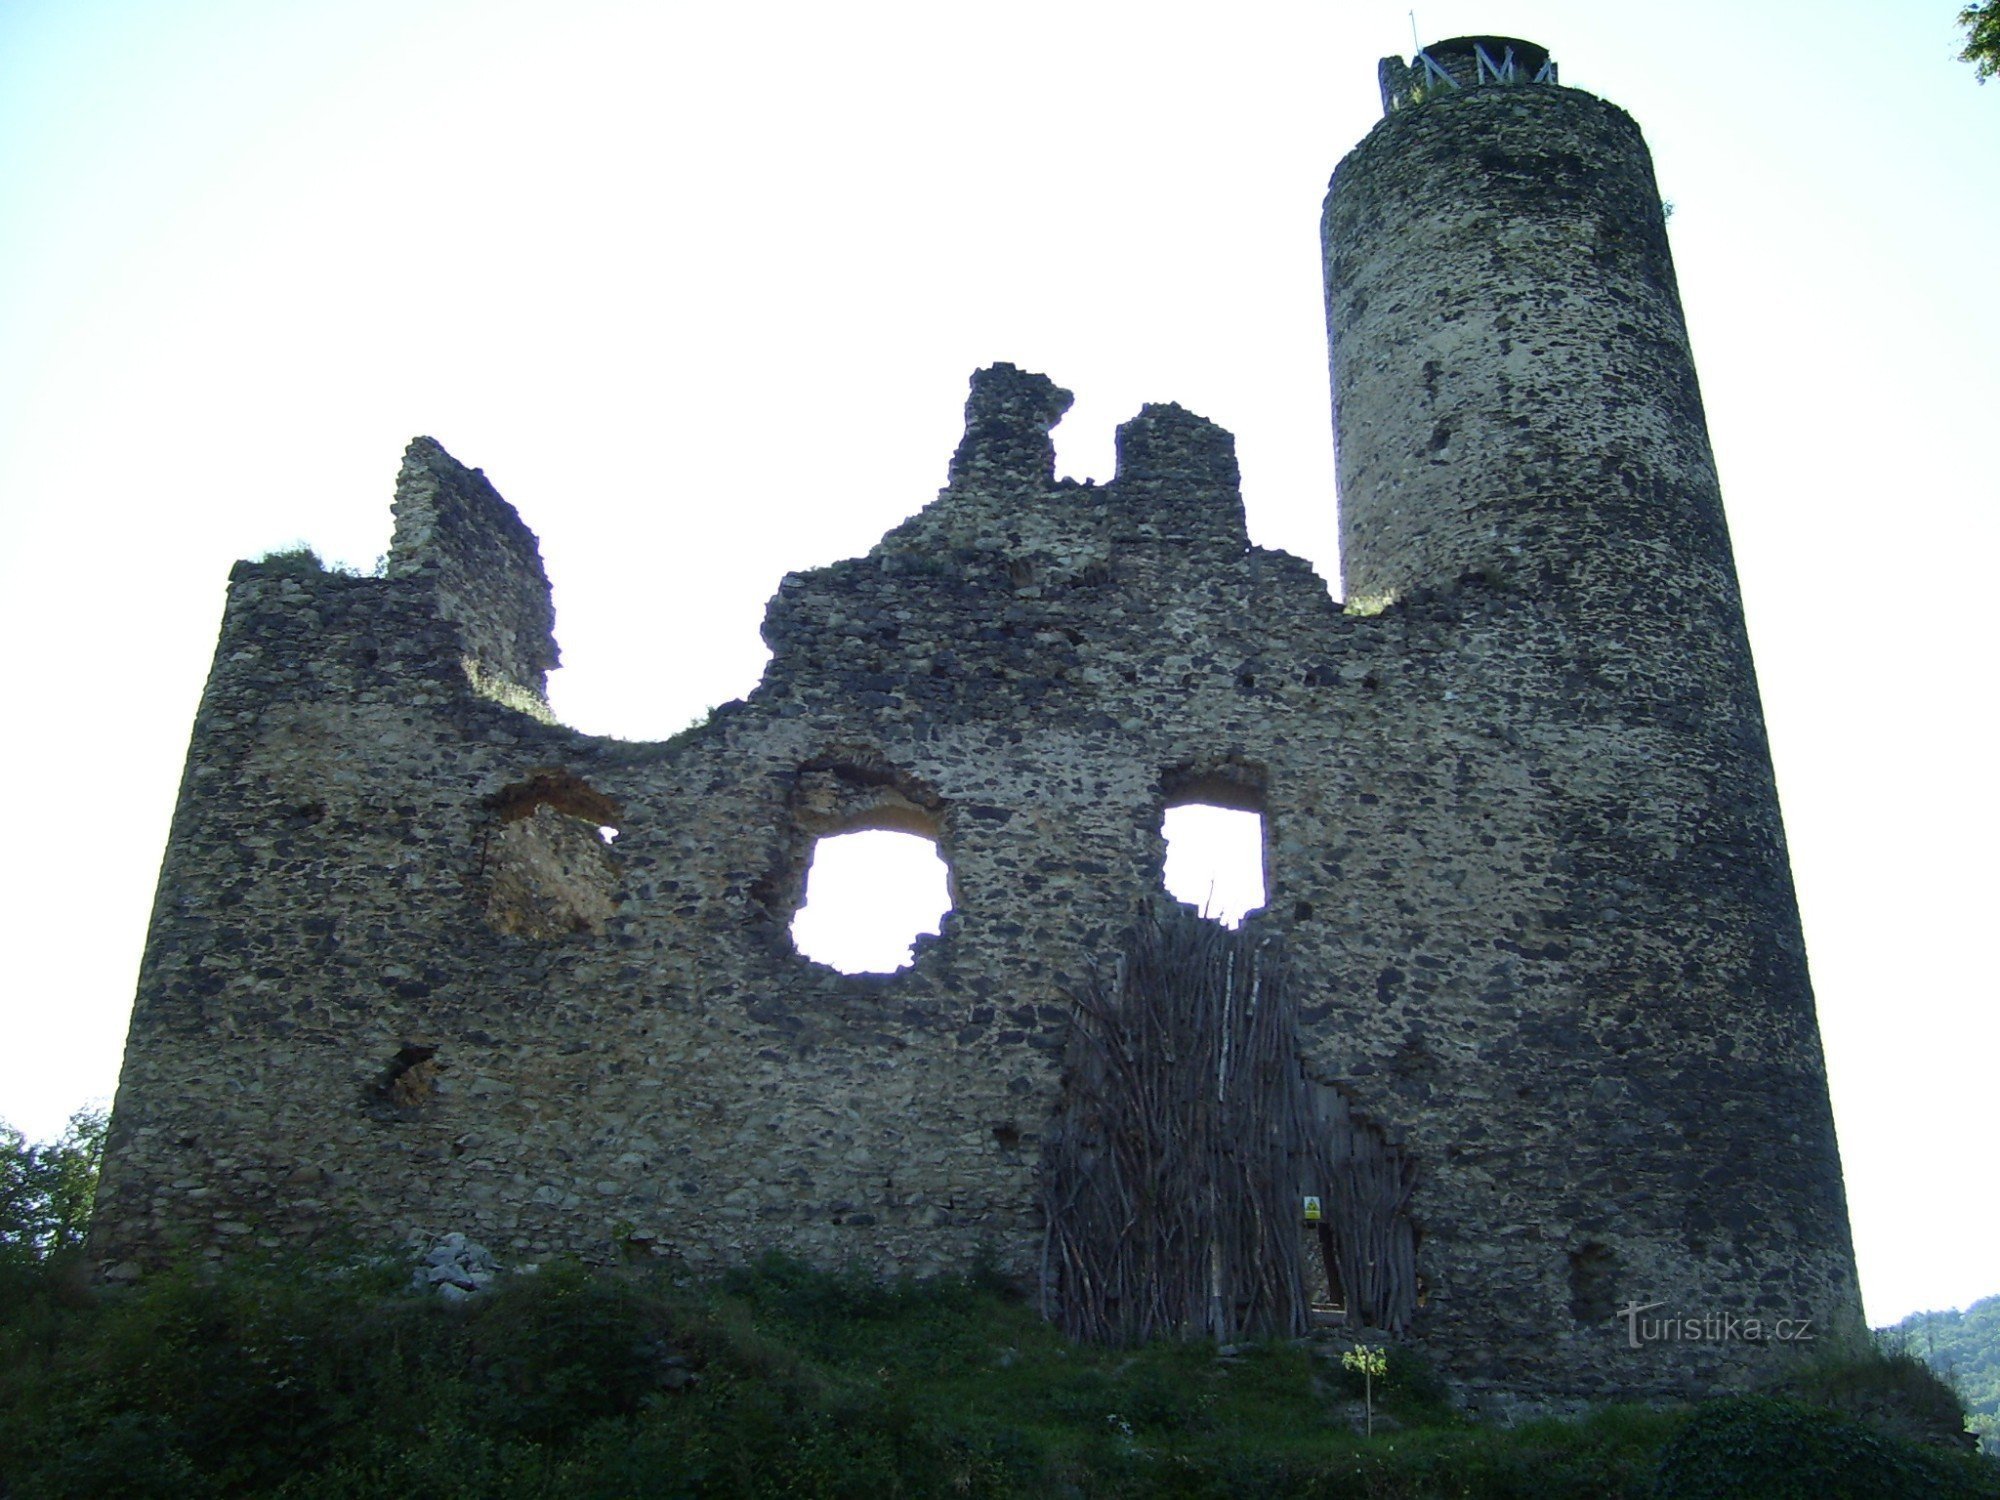 The ruins of Sukoslav Castle - Kostomlaty pod Milešovka